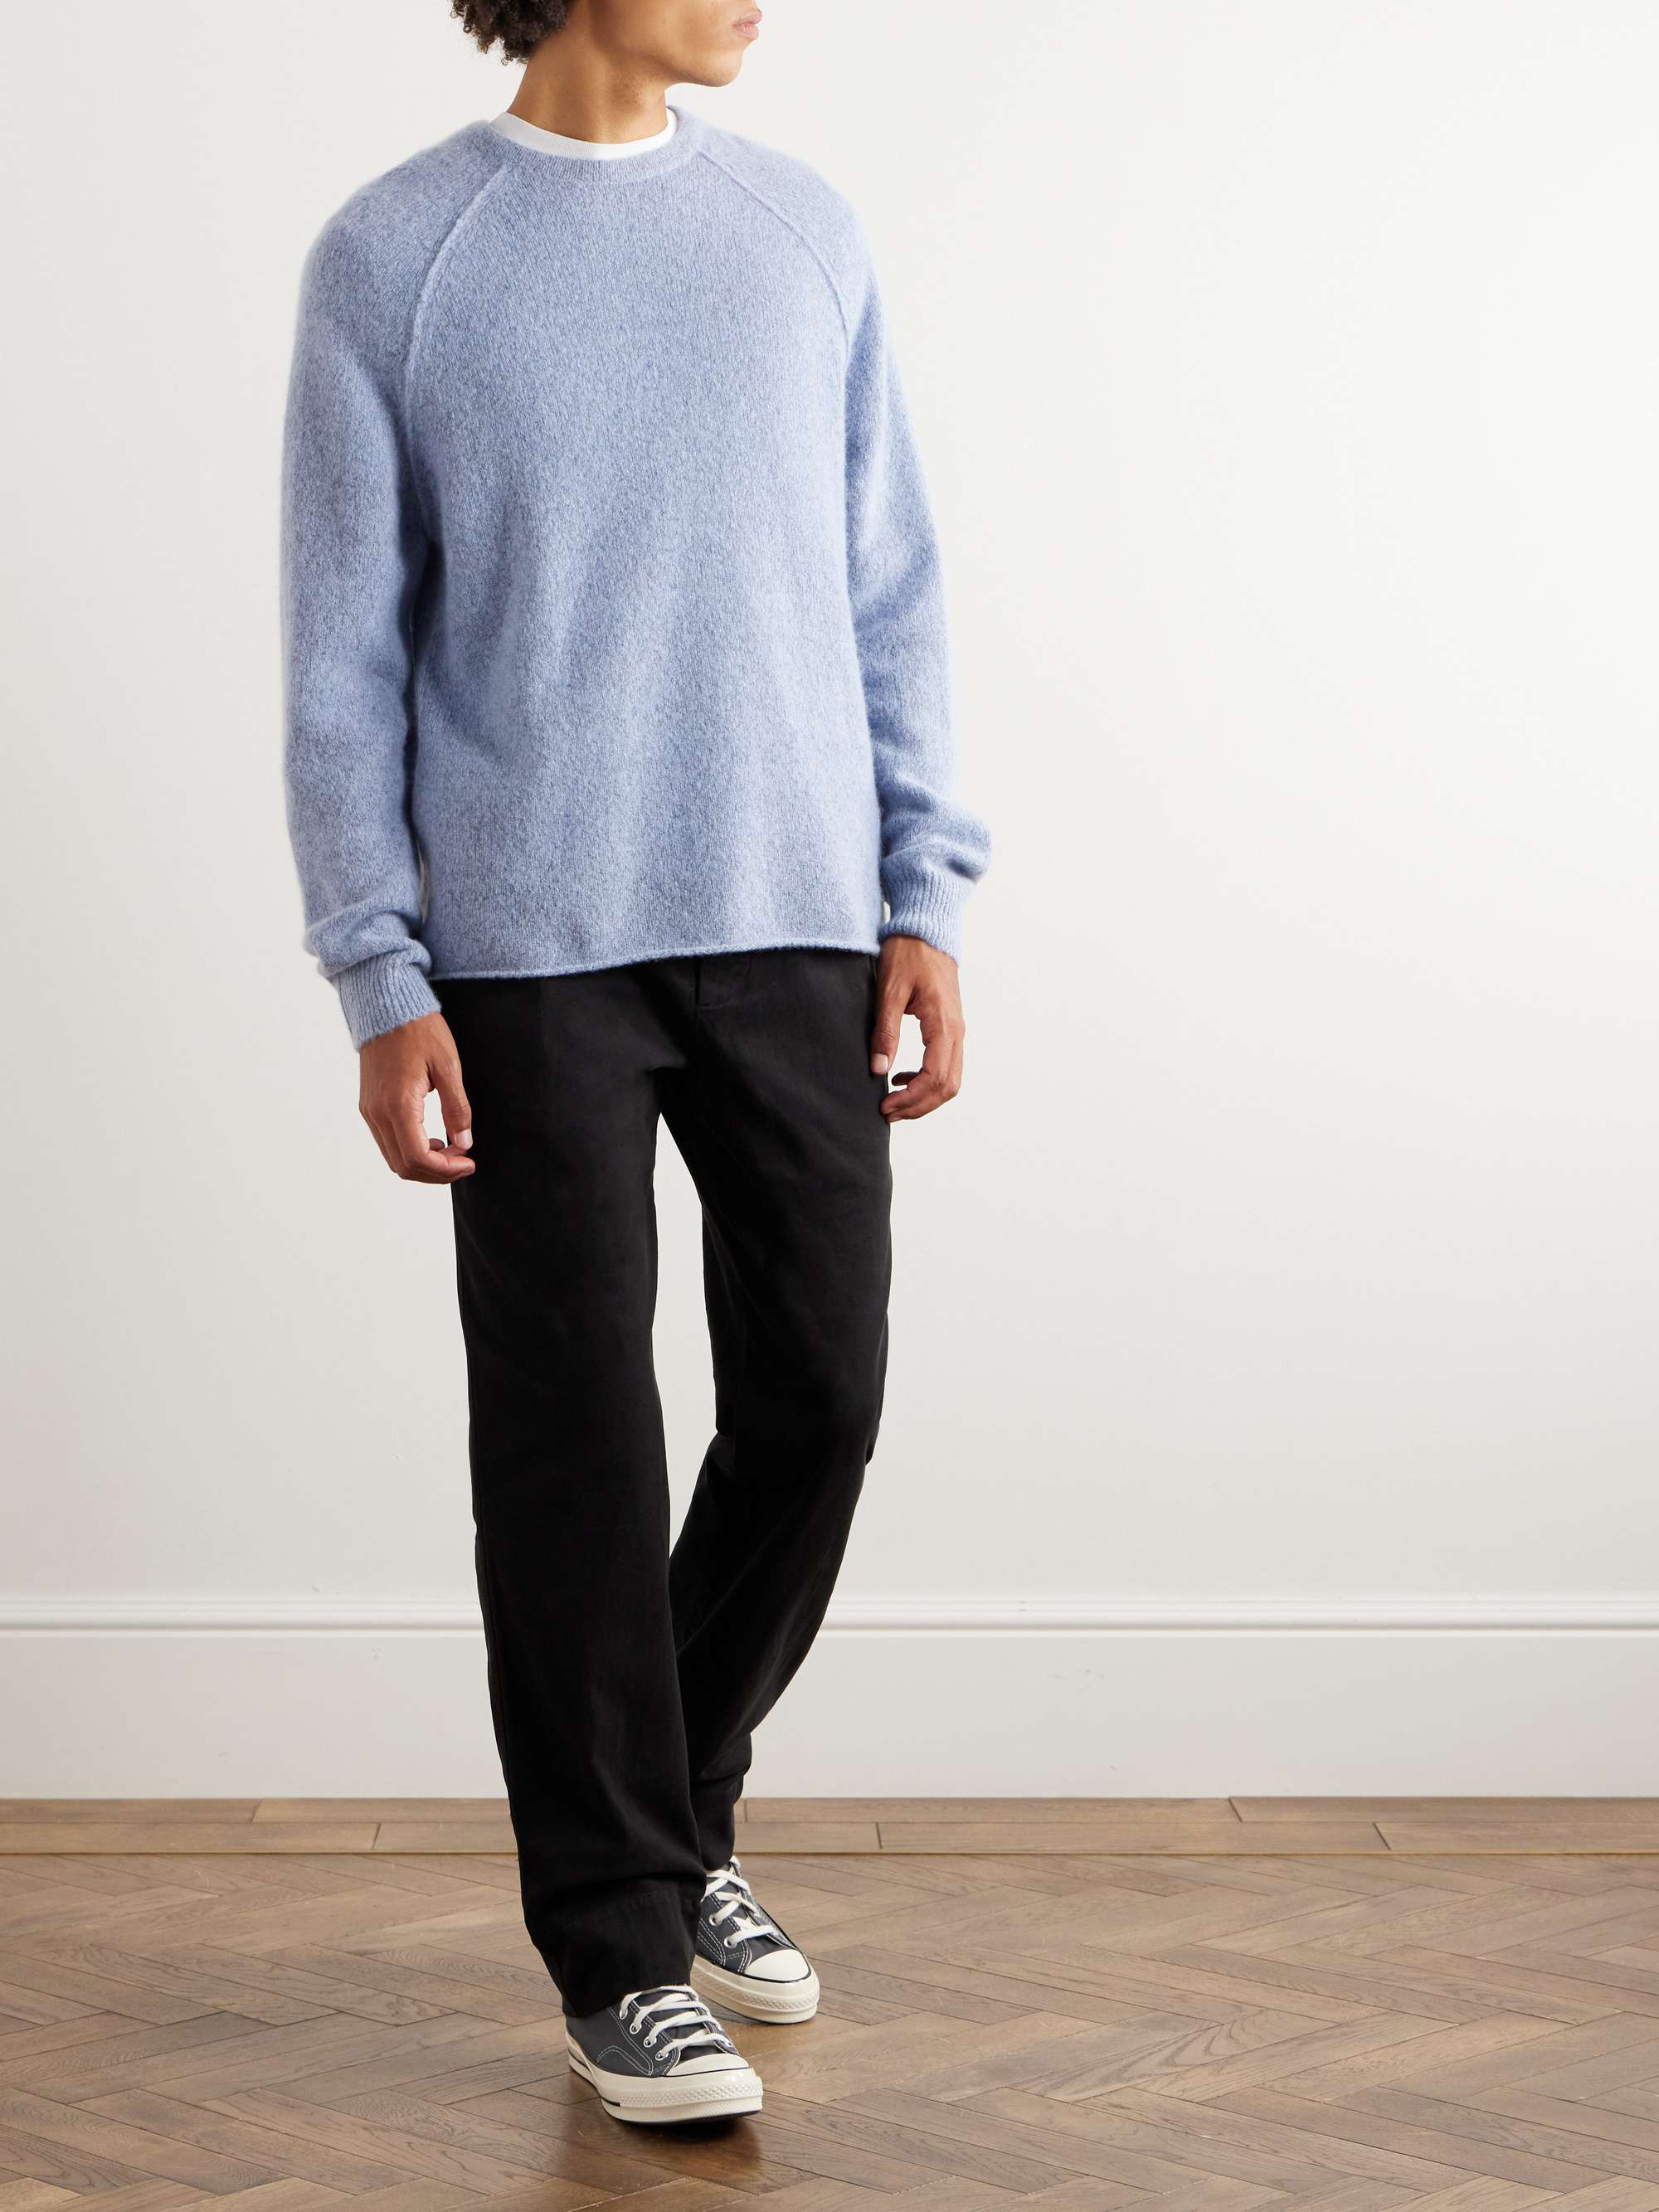 JAMES PERSE Cashmere Sweater for Men | MR PORTER